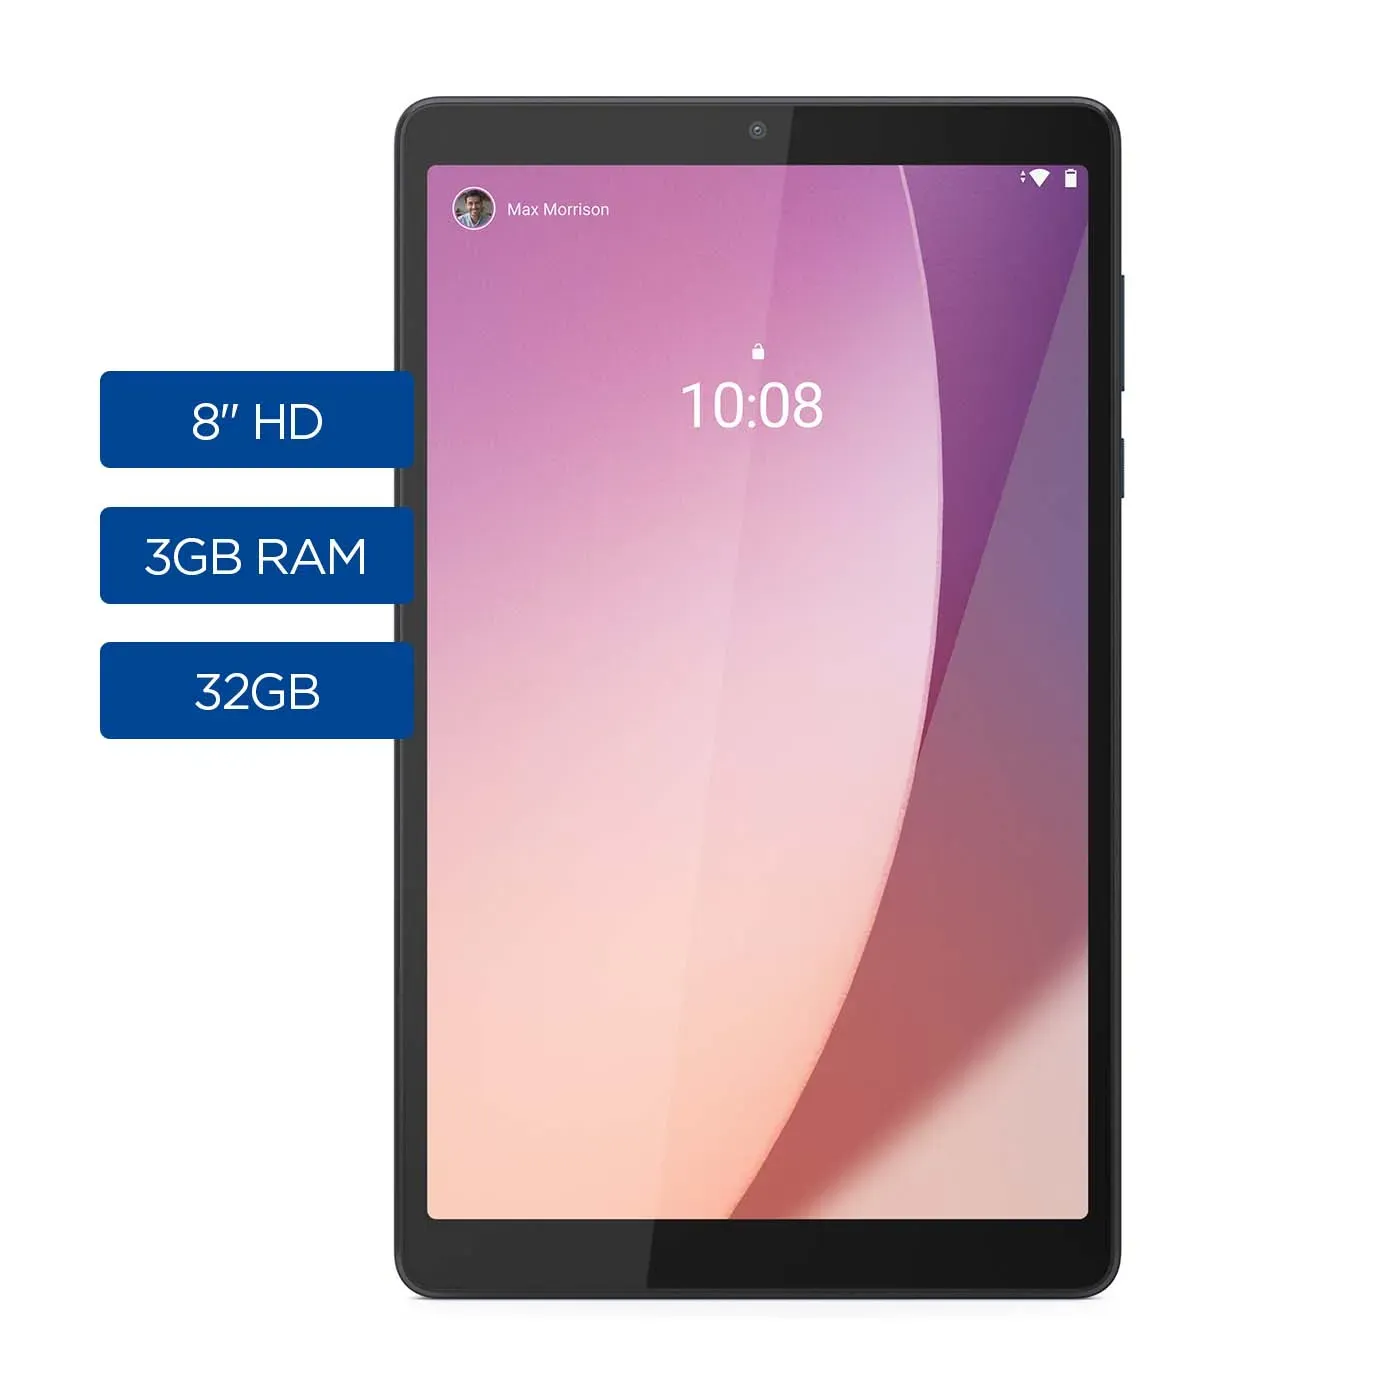 Tablet Lenovo M8 Tb300fu - Pant 8.0" - Quad Core 2.0ghz - 32gb - Mem 3gb - Android 9.0 - Doble Camara - Wifi - Abyss Blue + Folio Case + Film - Zabu0020co